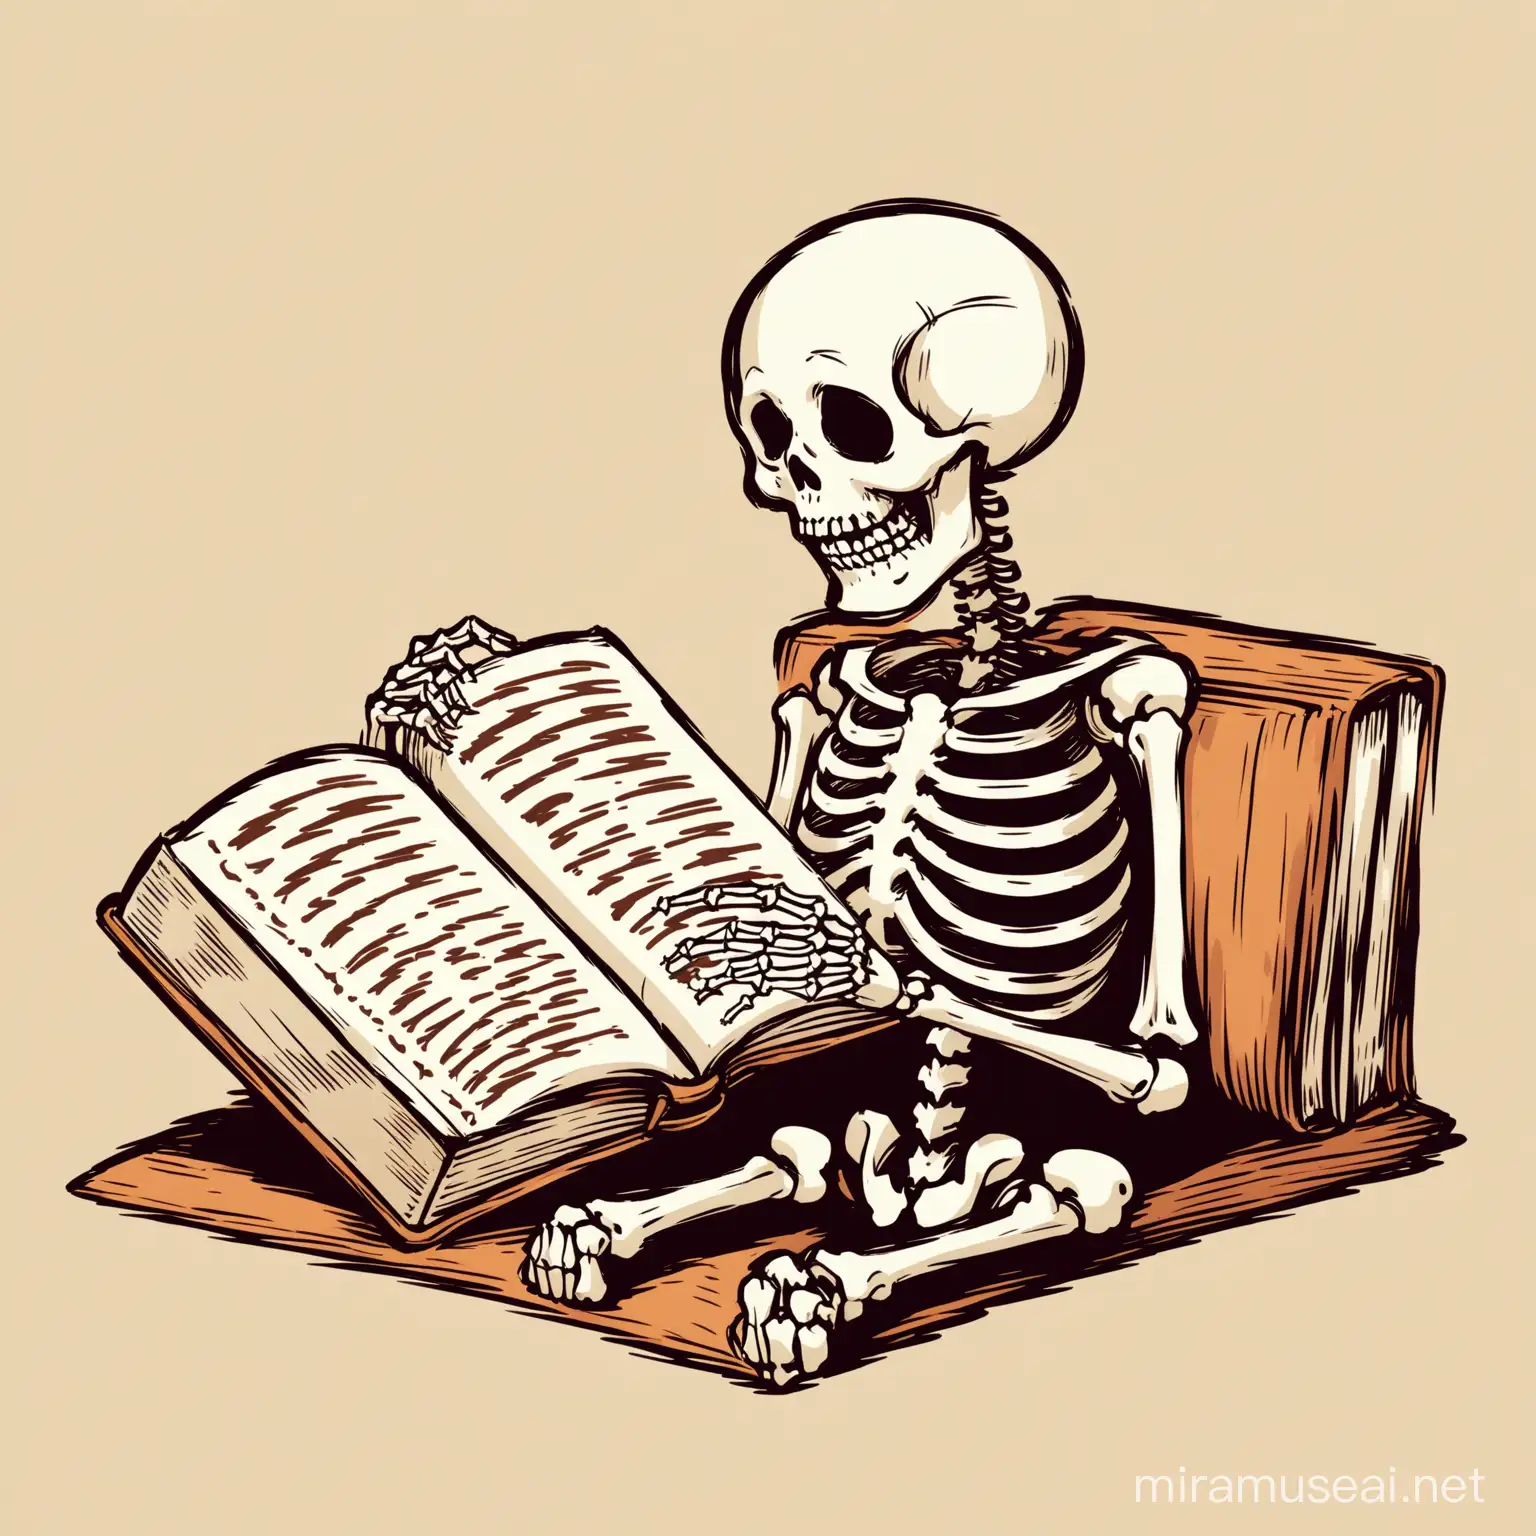 Skeleton Enjoying a Good Read Cartoon Illustration of a BookLoving Skeleton